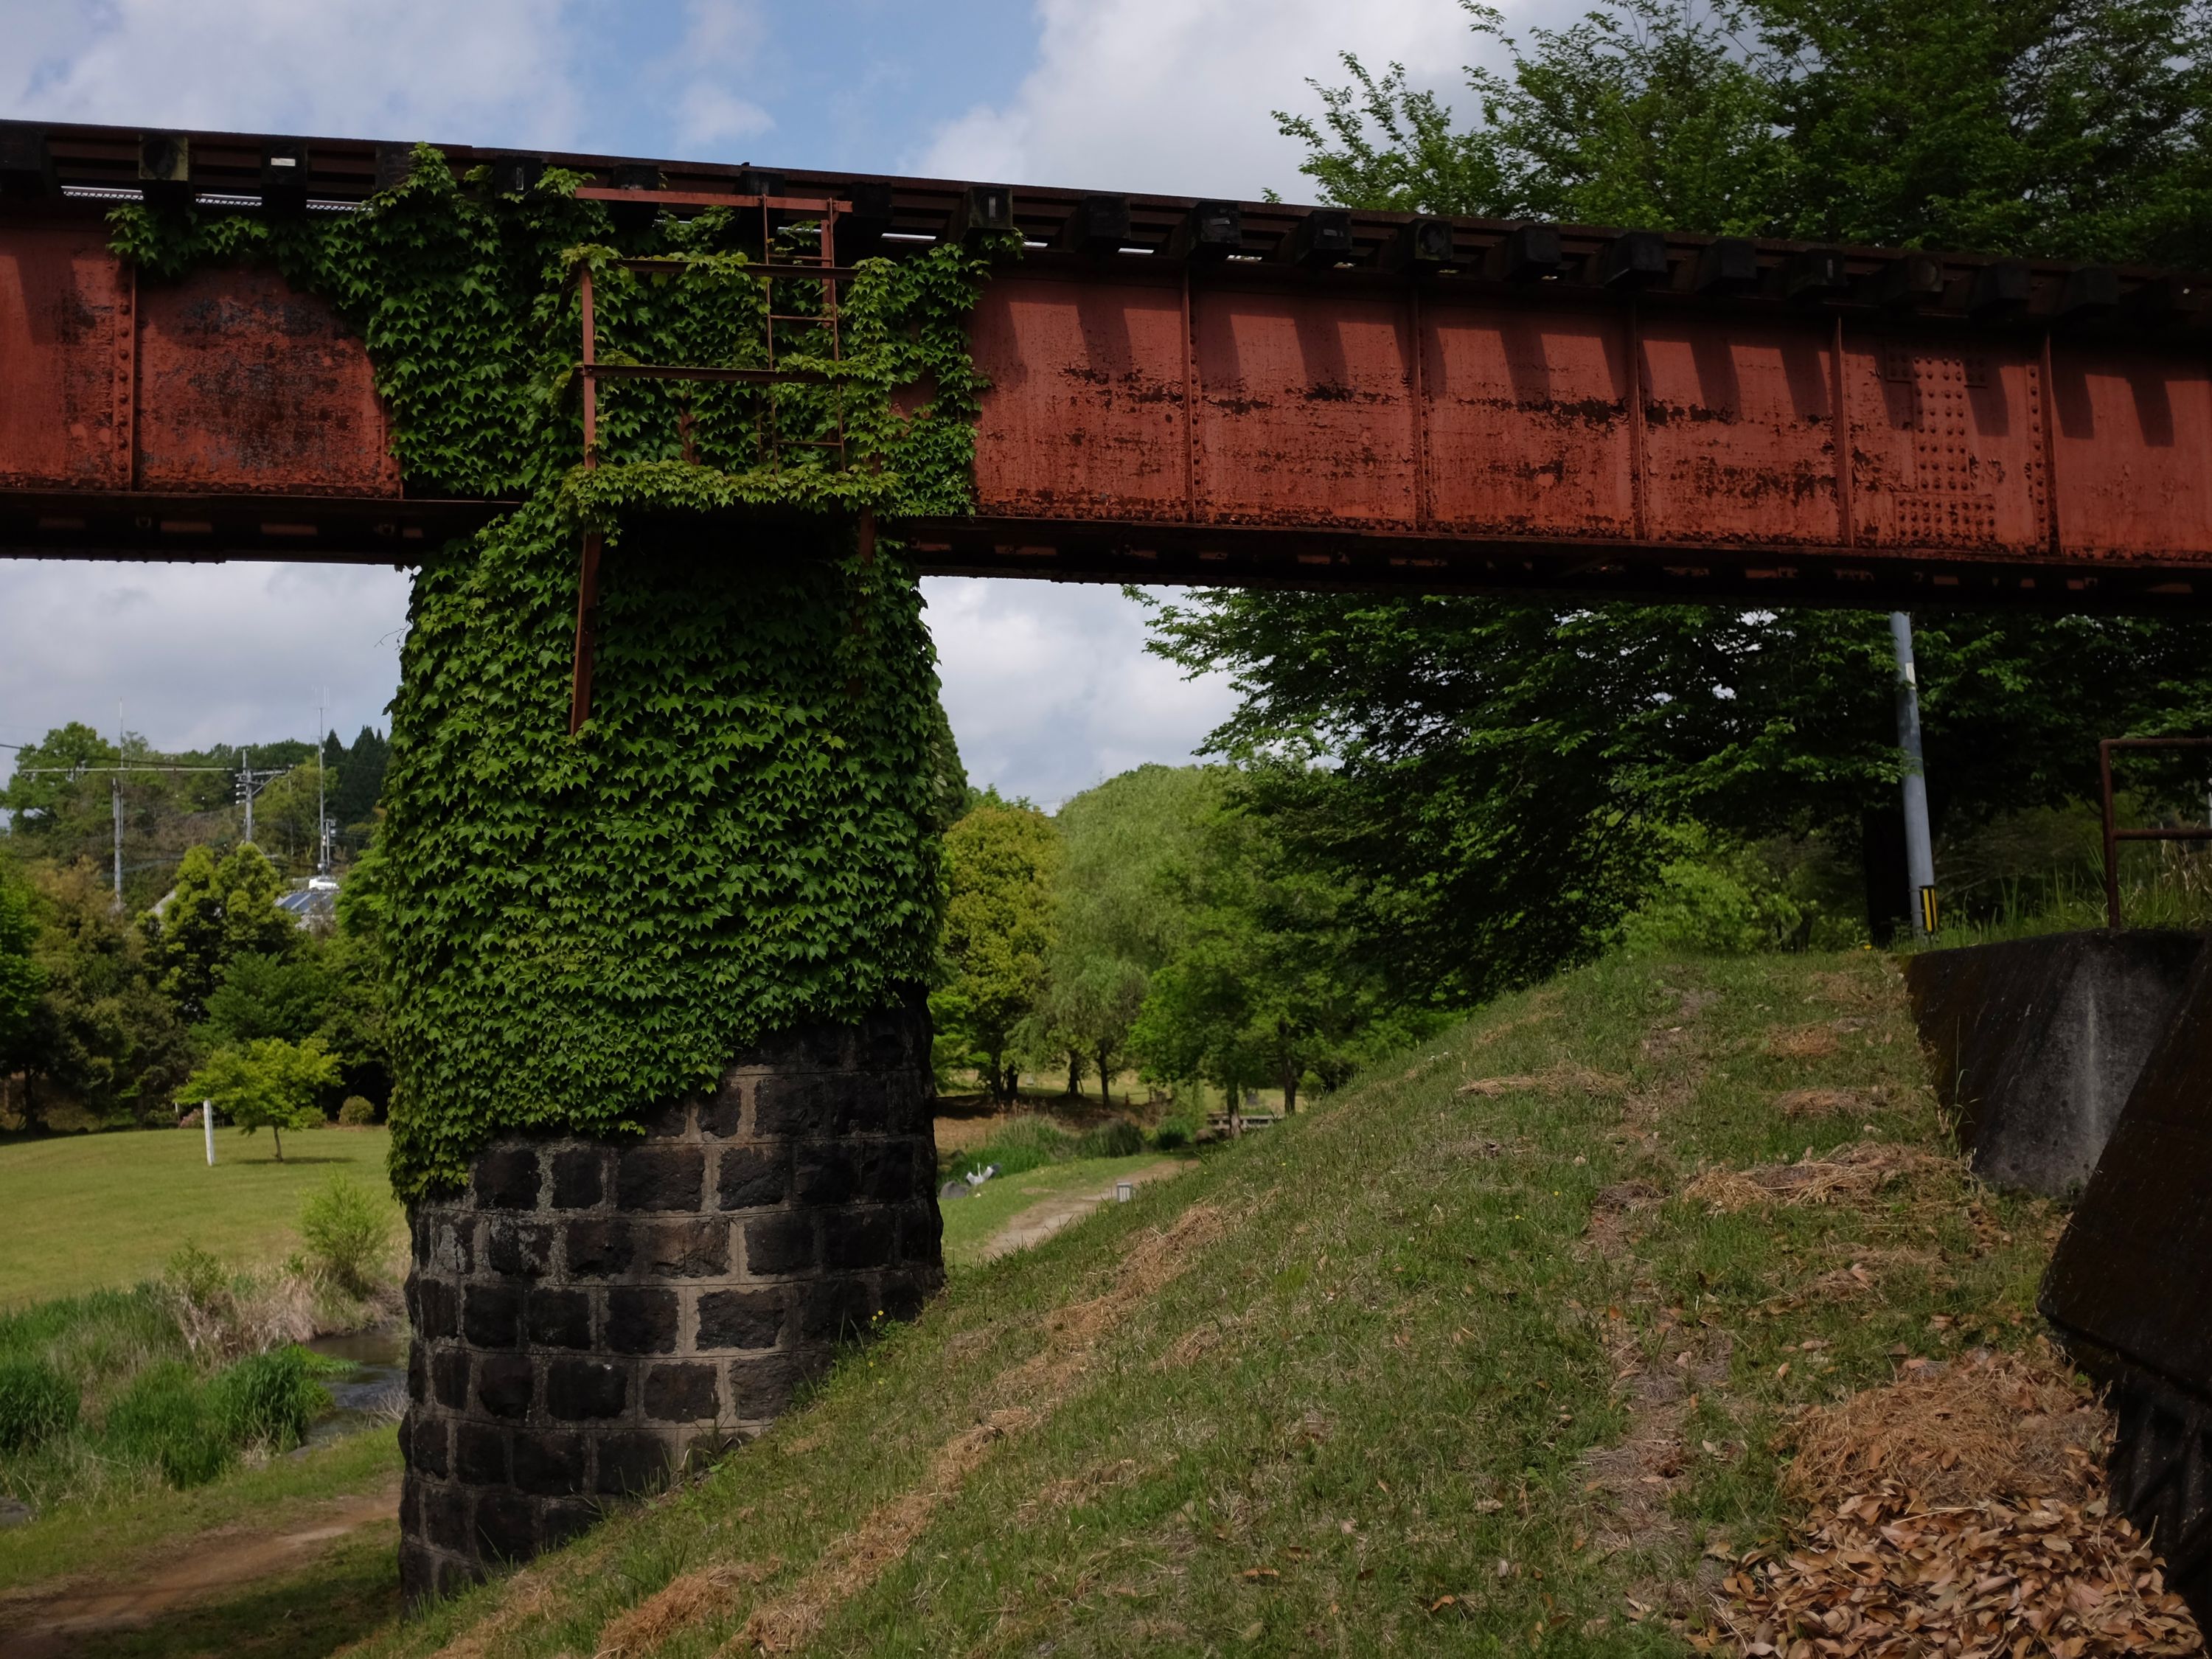 An old railway bridge of red steel and black basalt support columns.